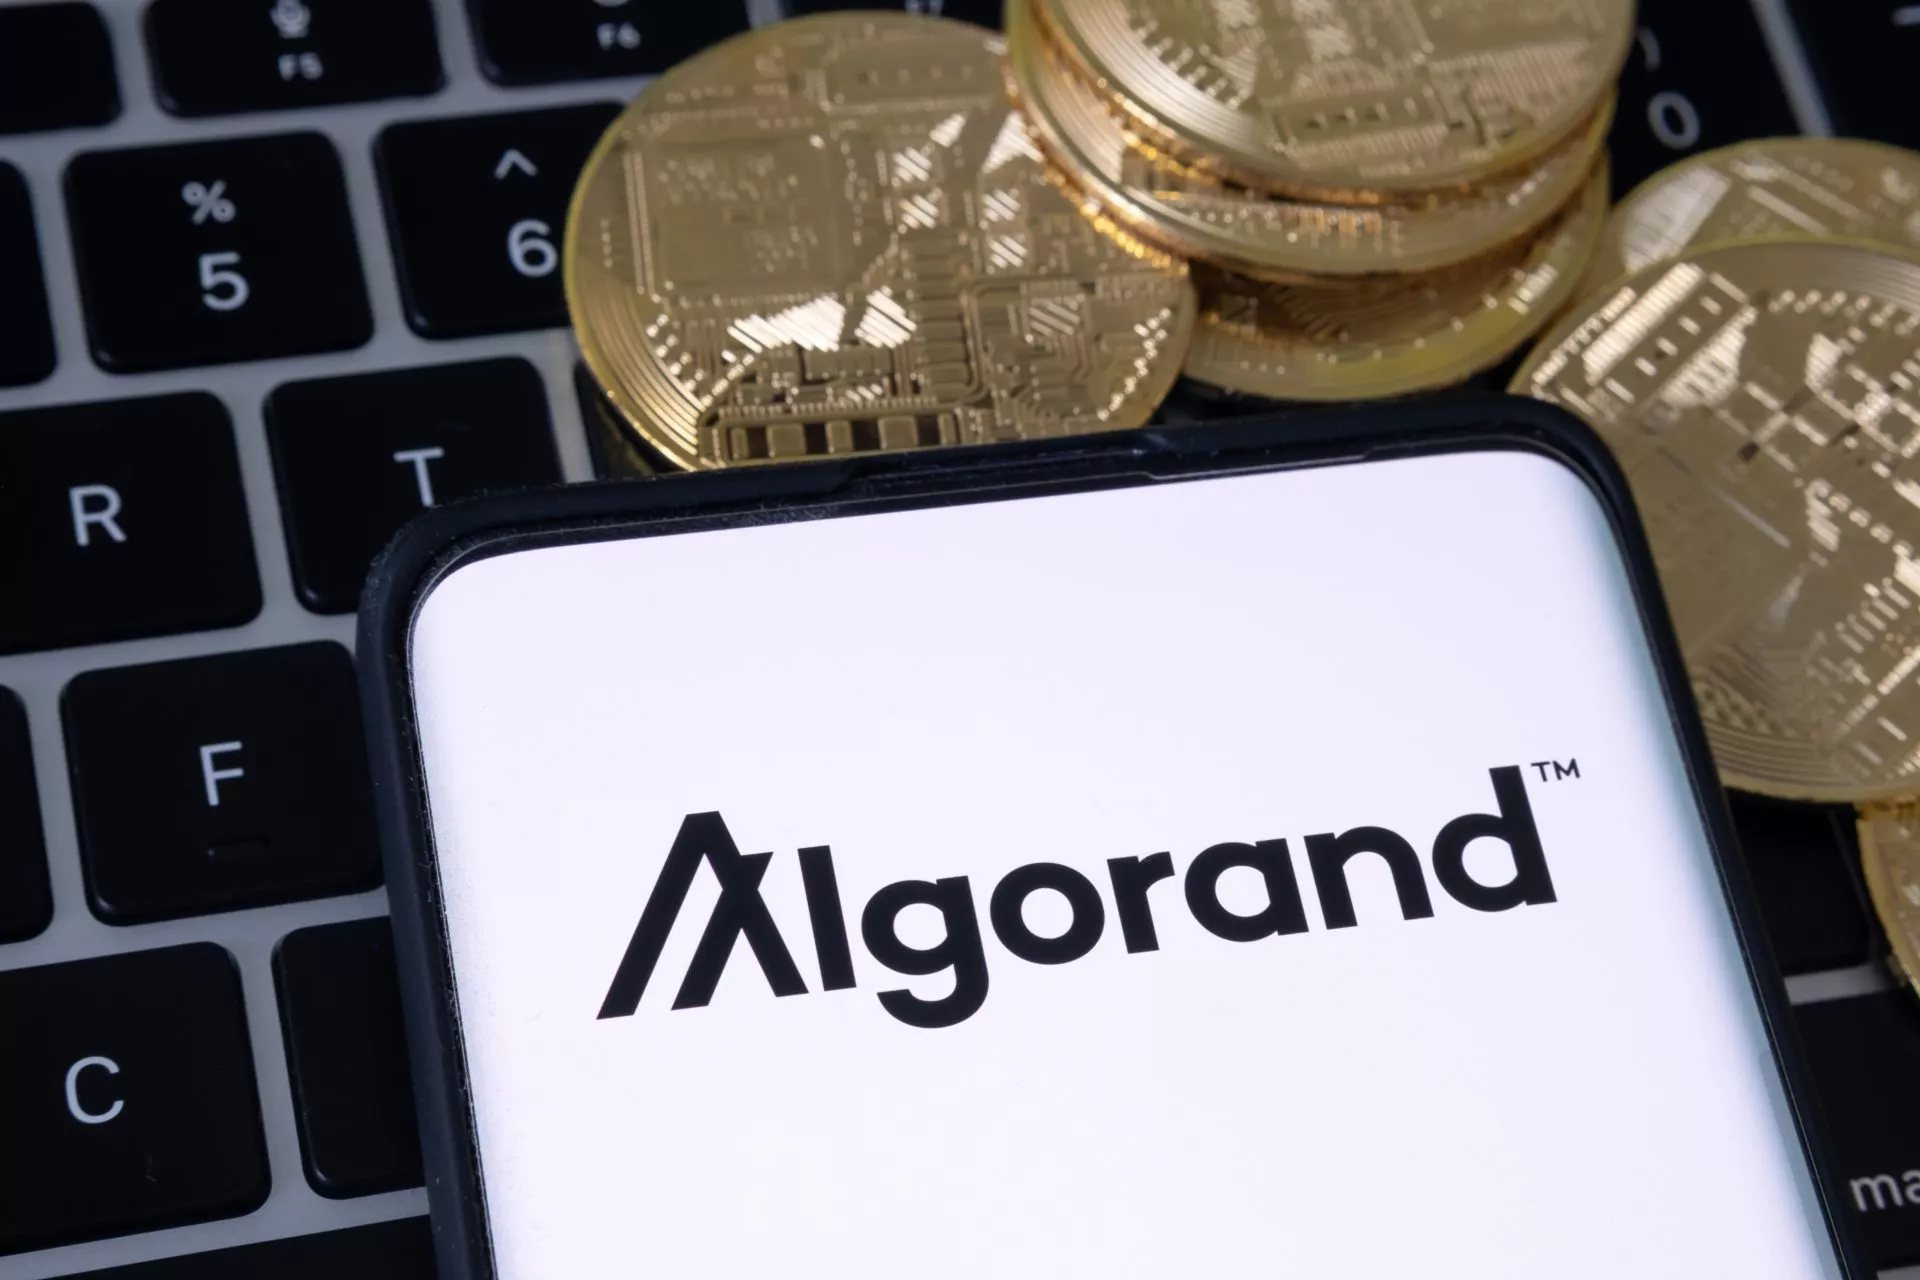 Algorand cryptocurrency platform logo seen on smartphone placed